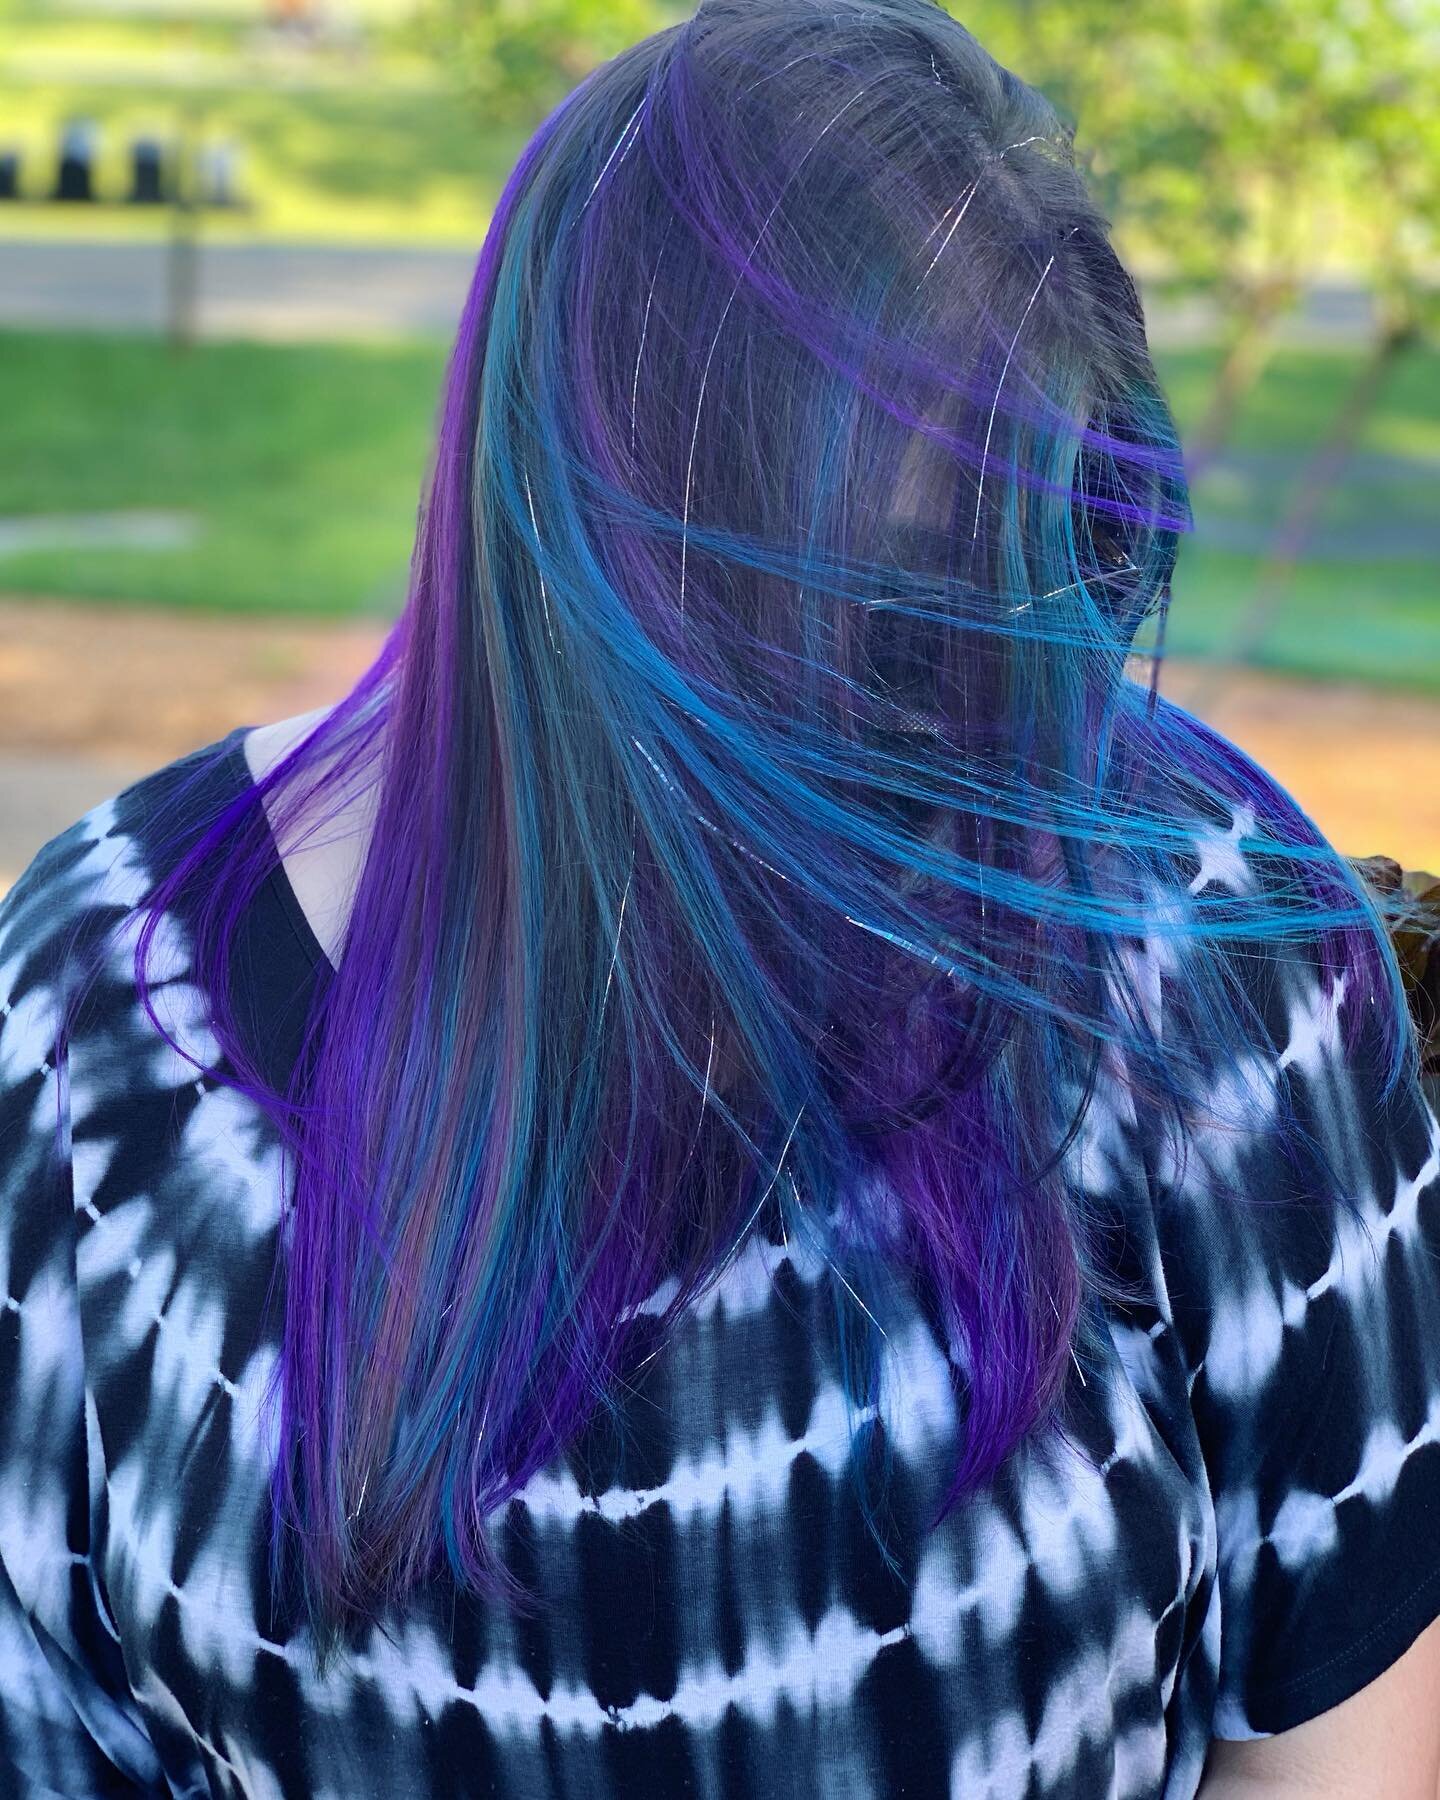 Mystical and stunning 💜🦄💙🦋

#urbanfringe #urbanfringesalon #hairstylist #chapelhill #chapelhillsalon #alt #altsalon #purple #purplehair #blue #bluehair #fairyhair #silverfairyhair #unicornhair